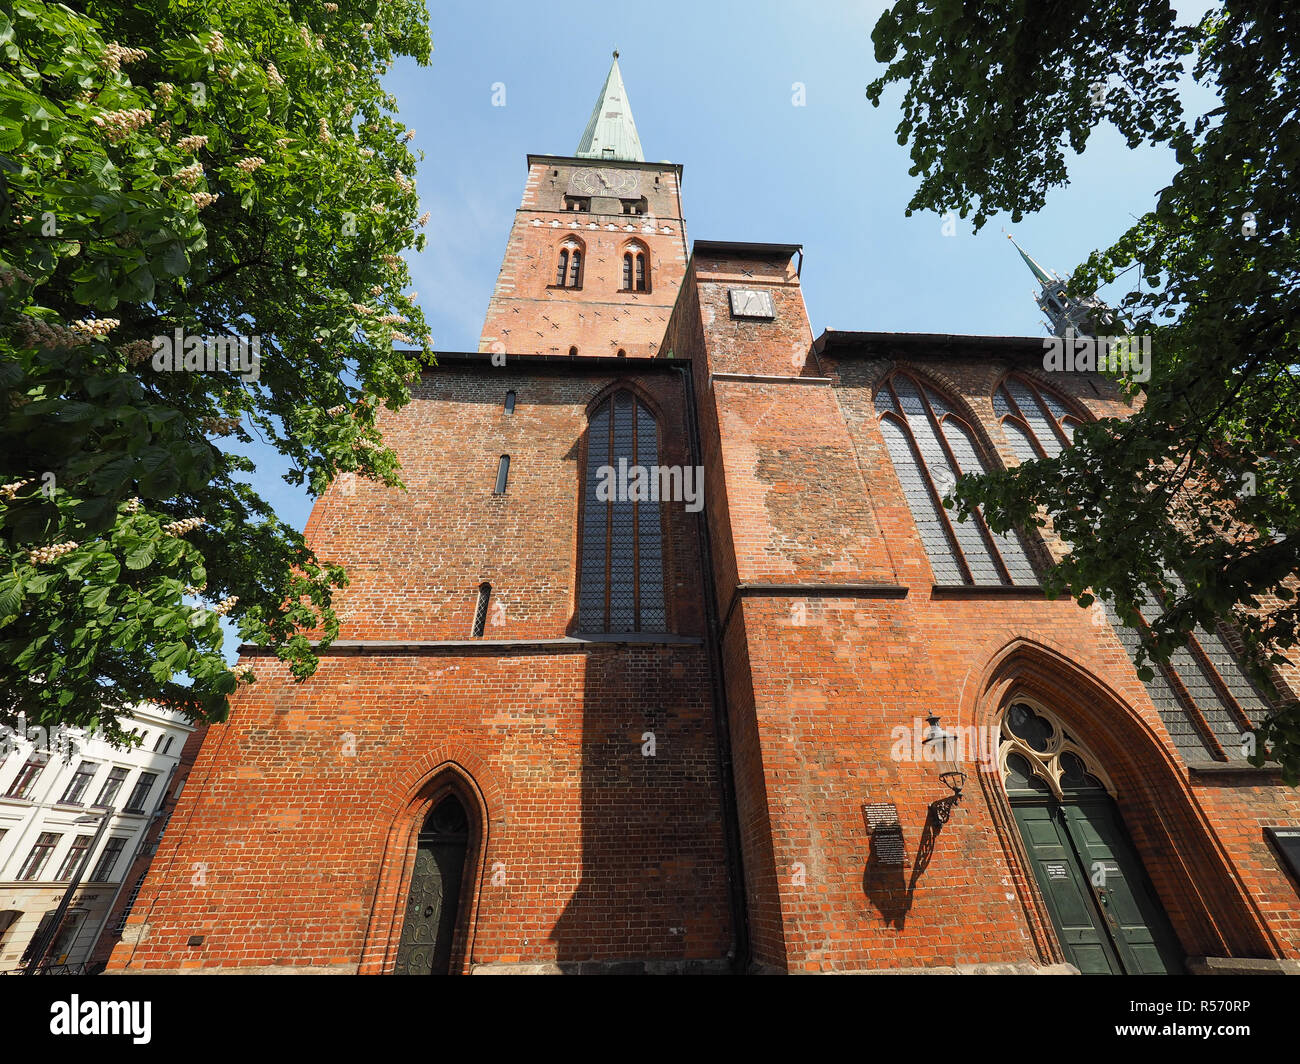 St Jakobi church in Luebeck Stock Photo - Alamy